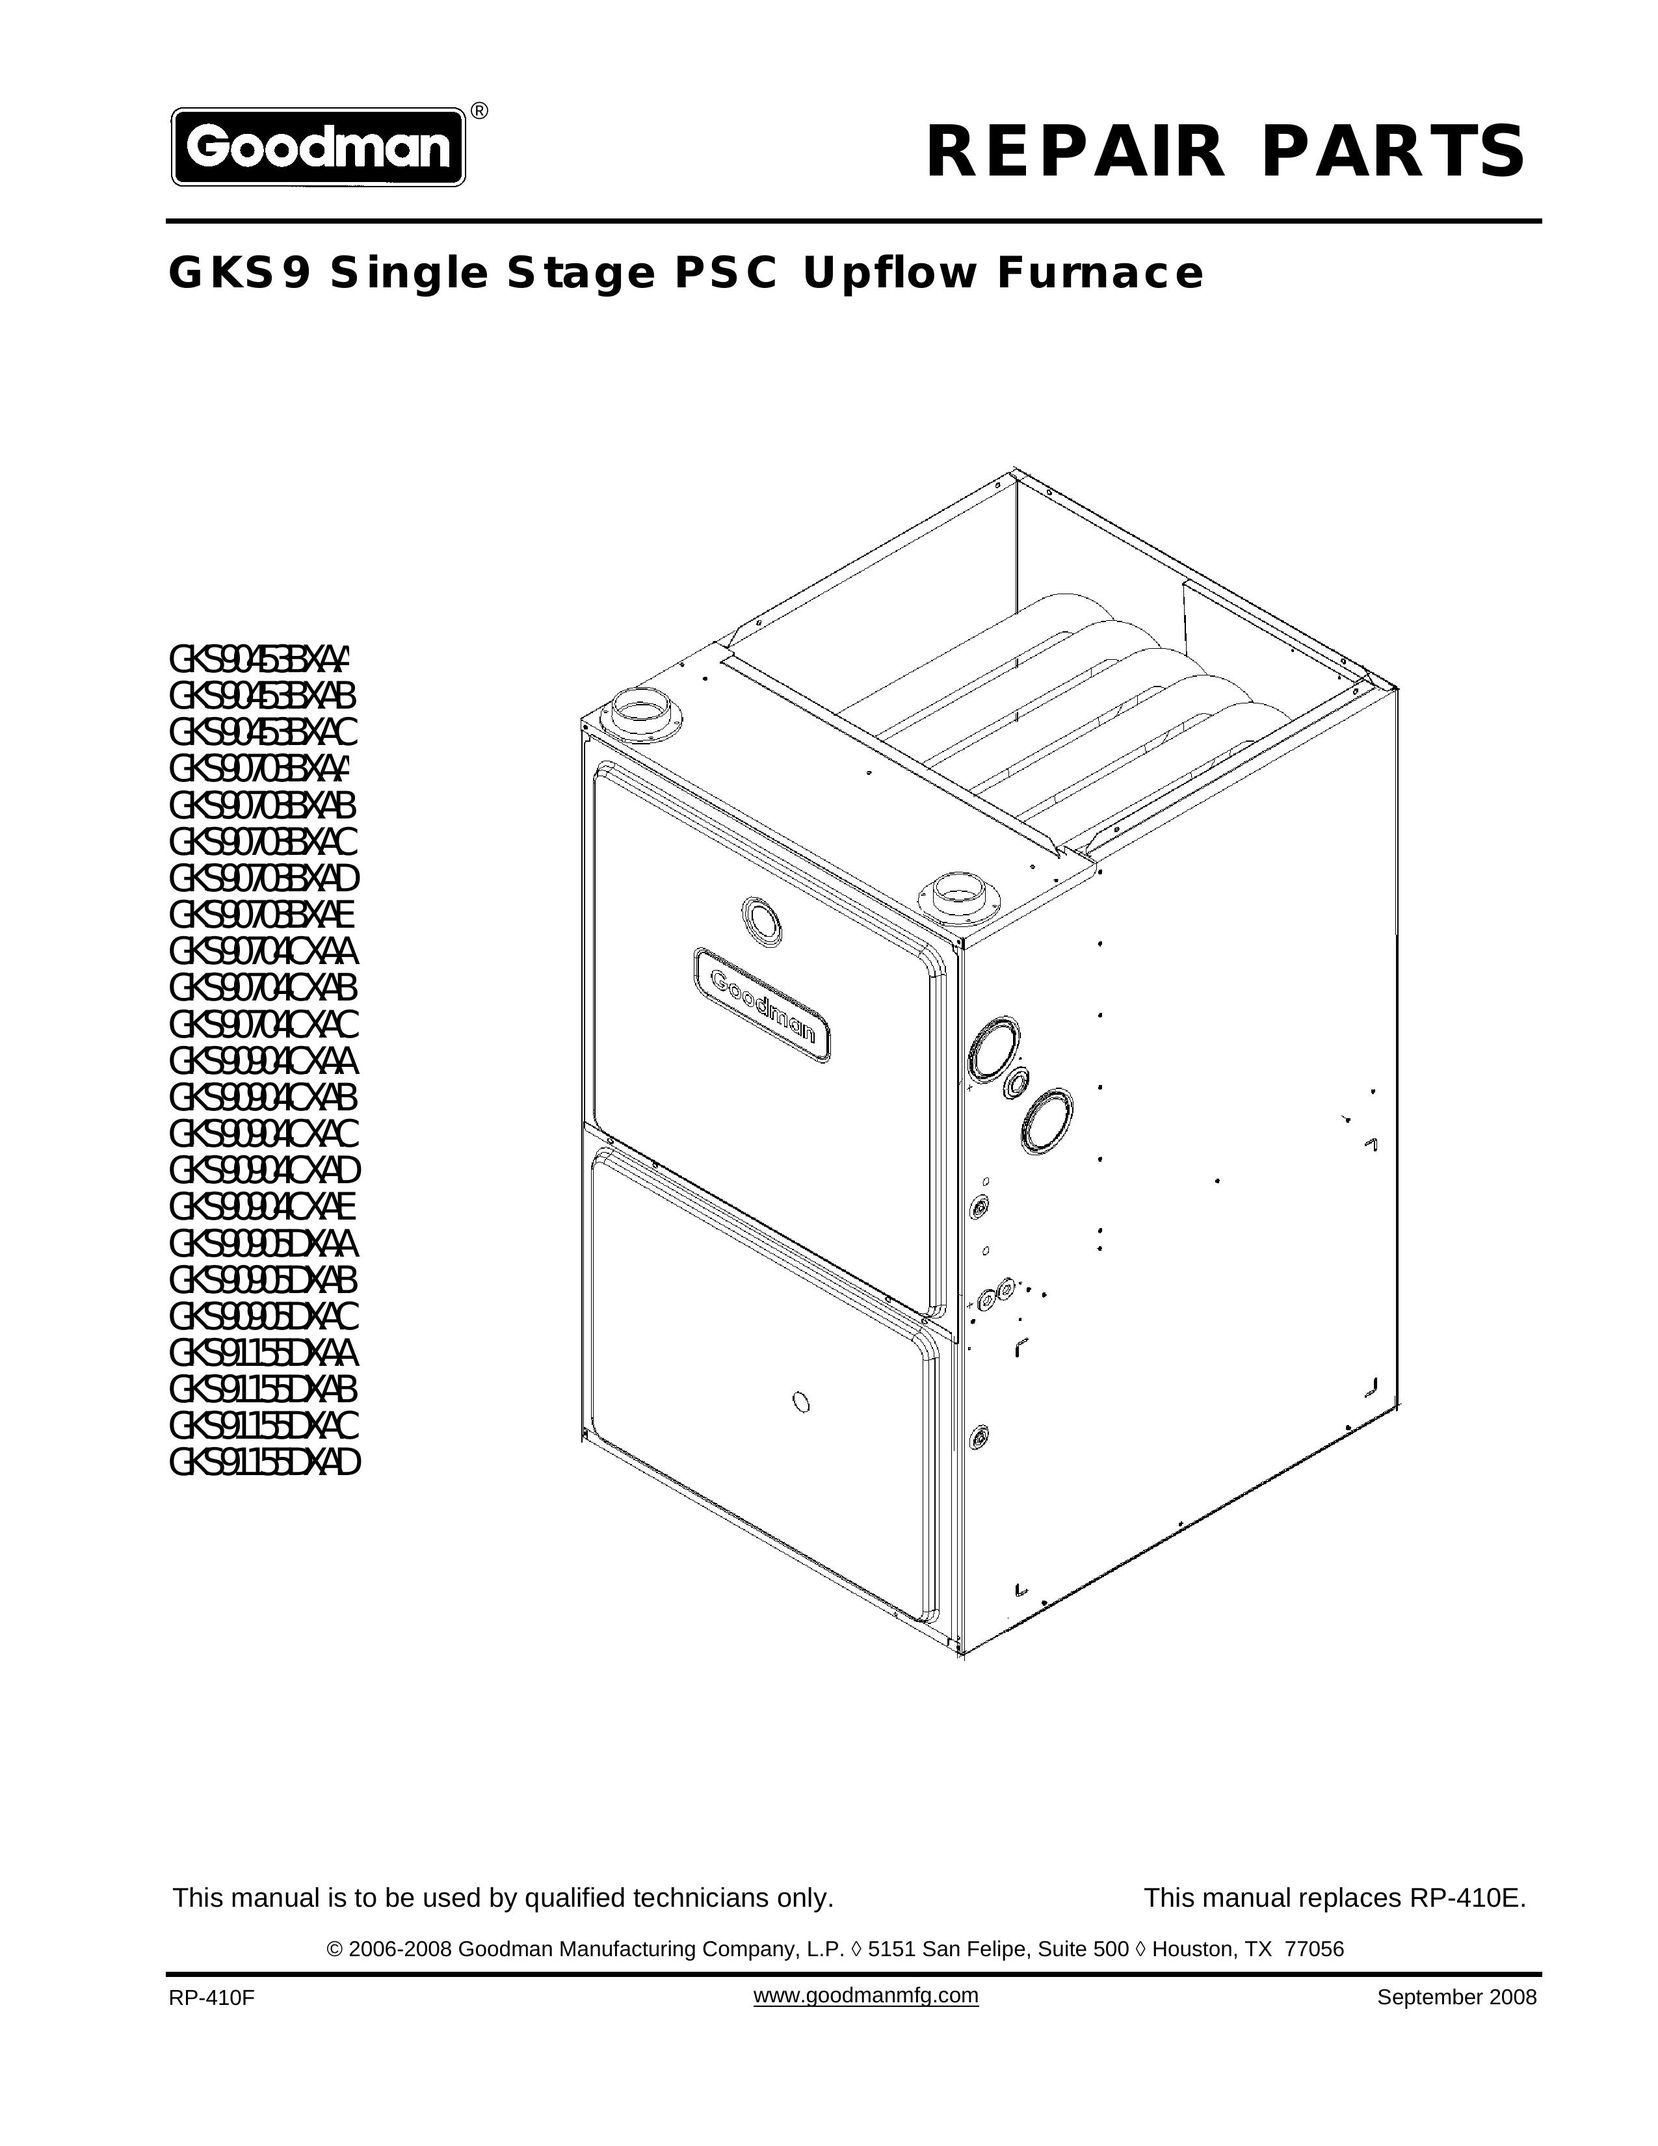 Goodman Mfg GKS90453BXAC Furnace User Manual